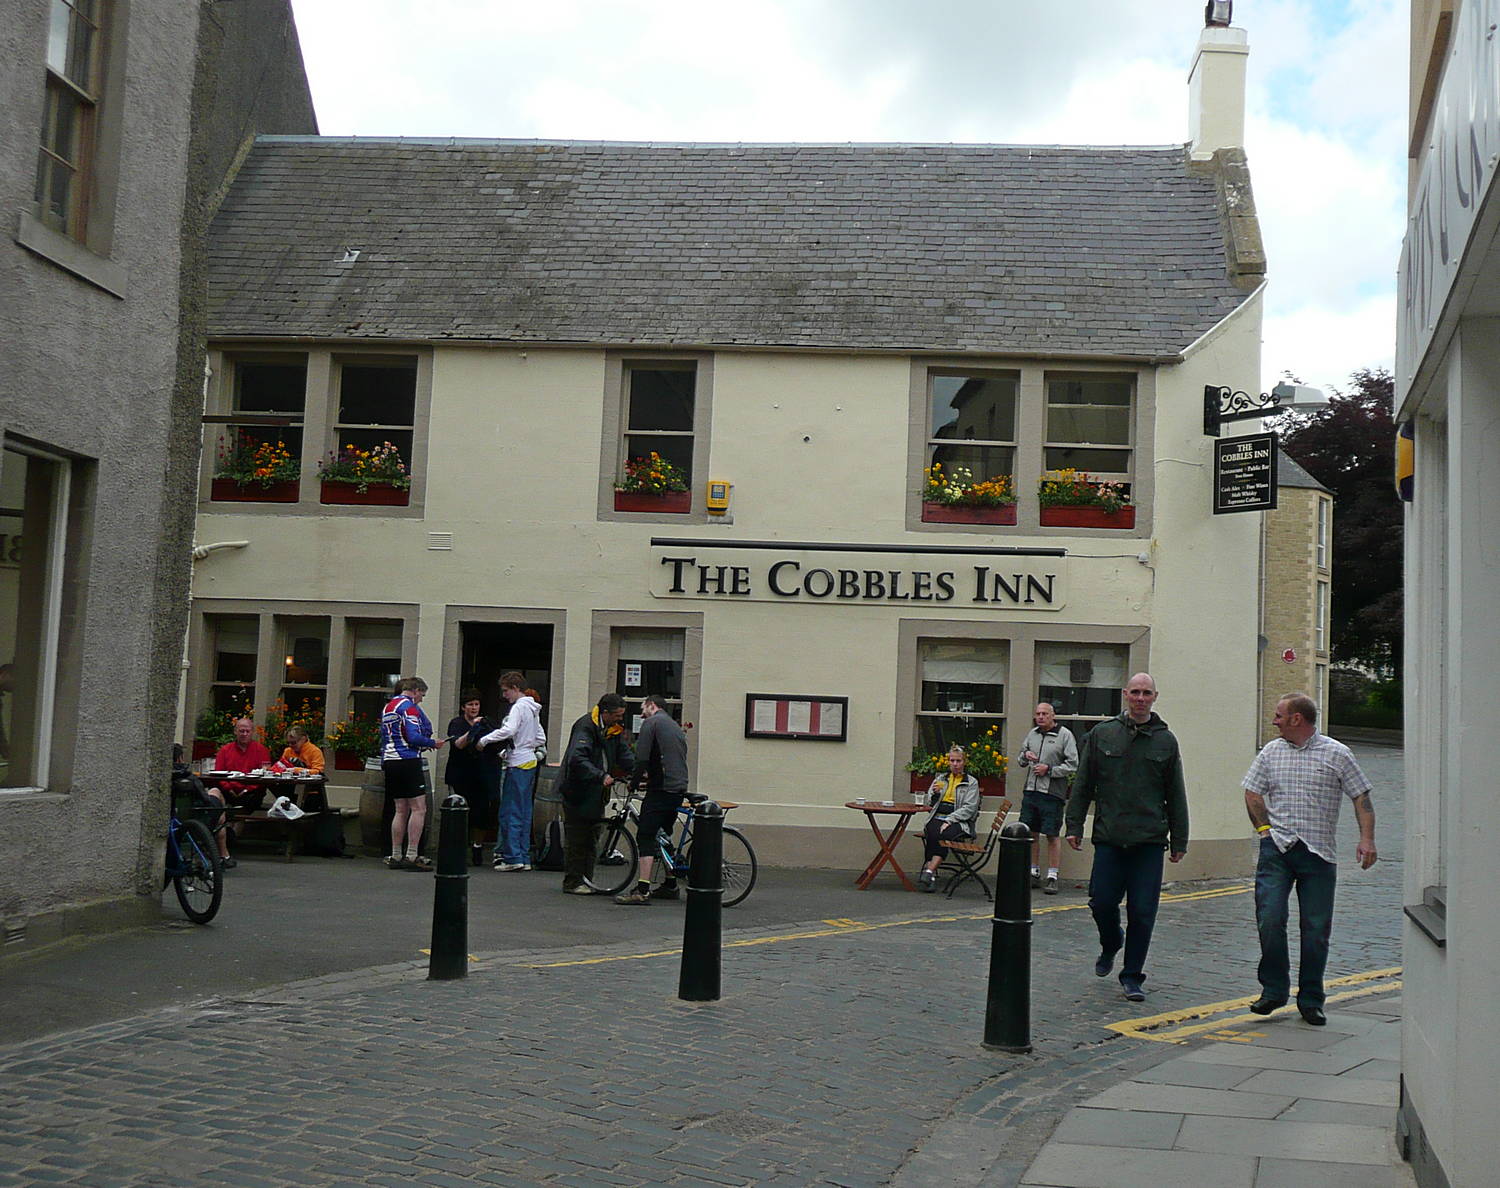 The Cobbles Inn